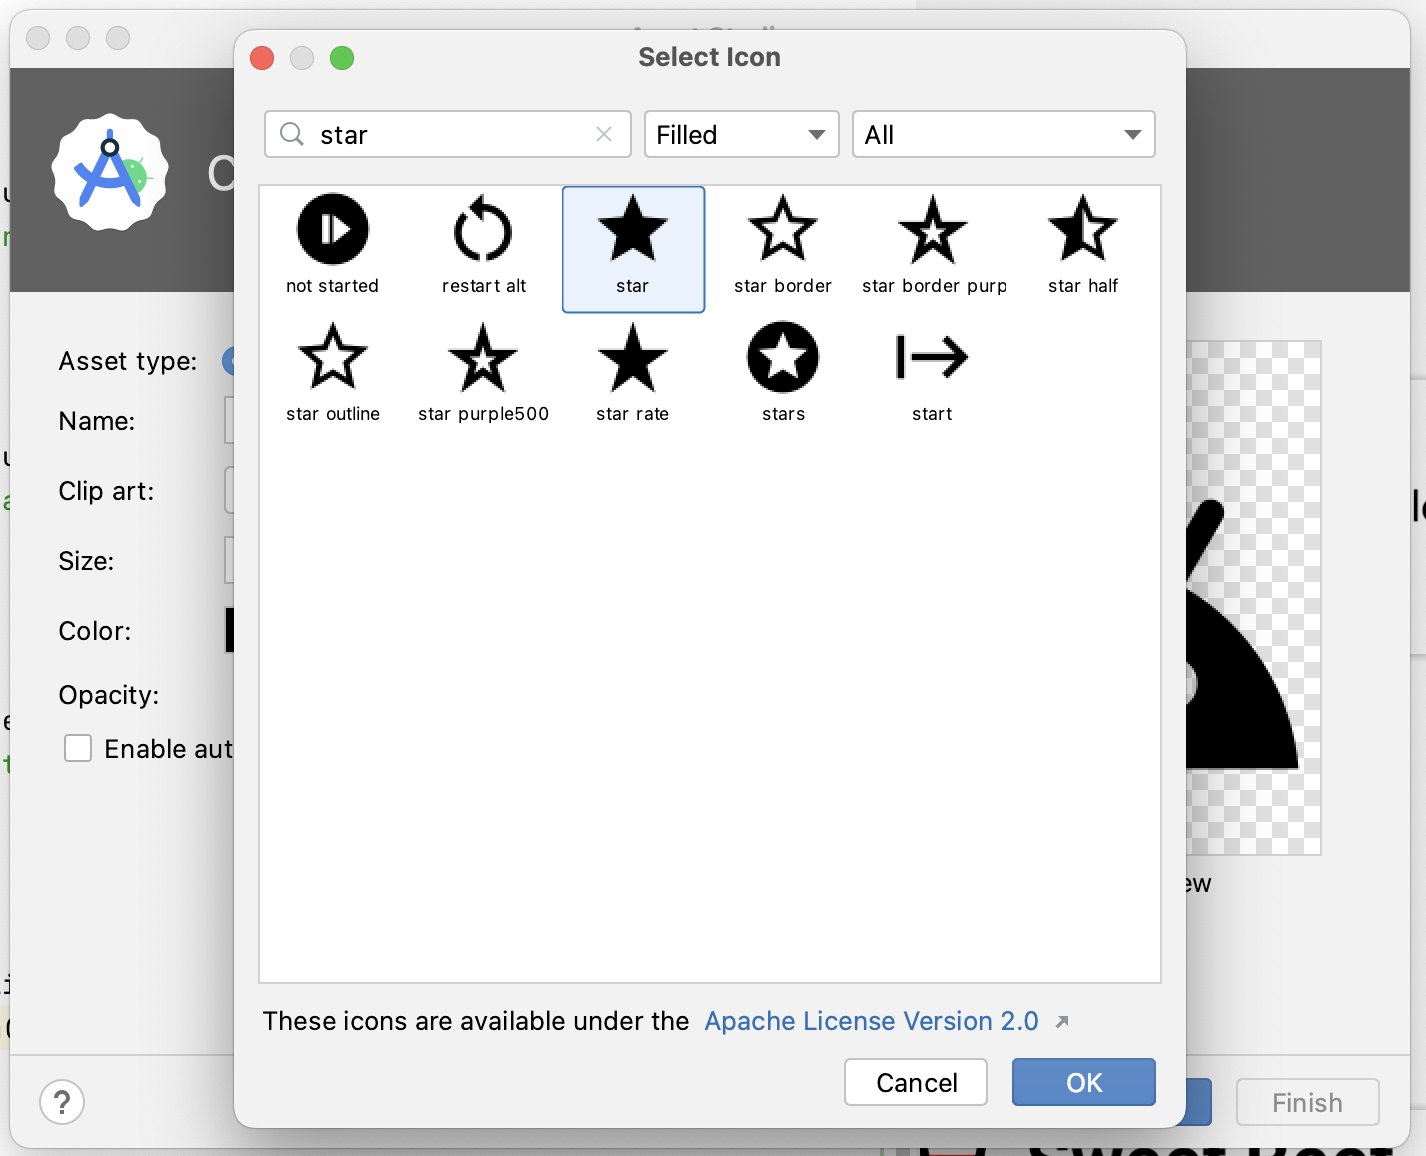 「Select Icon」對話方塊顯示已選取星號圖示